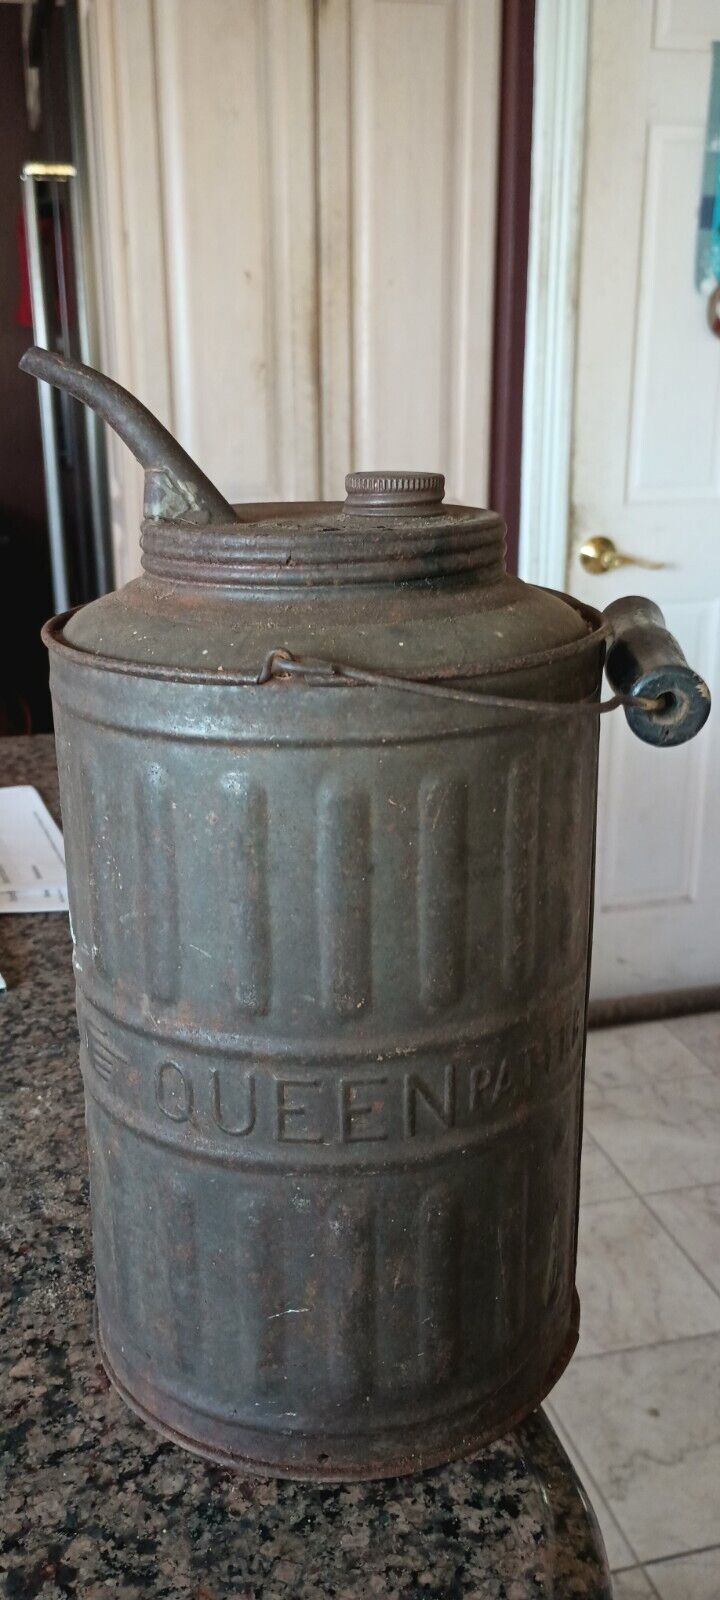 Early Glass Queen Kerosene Fuel Oil Lamp Filler Can Lantern Bottle Can Gas Rare